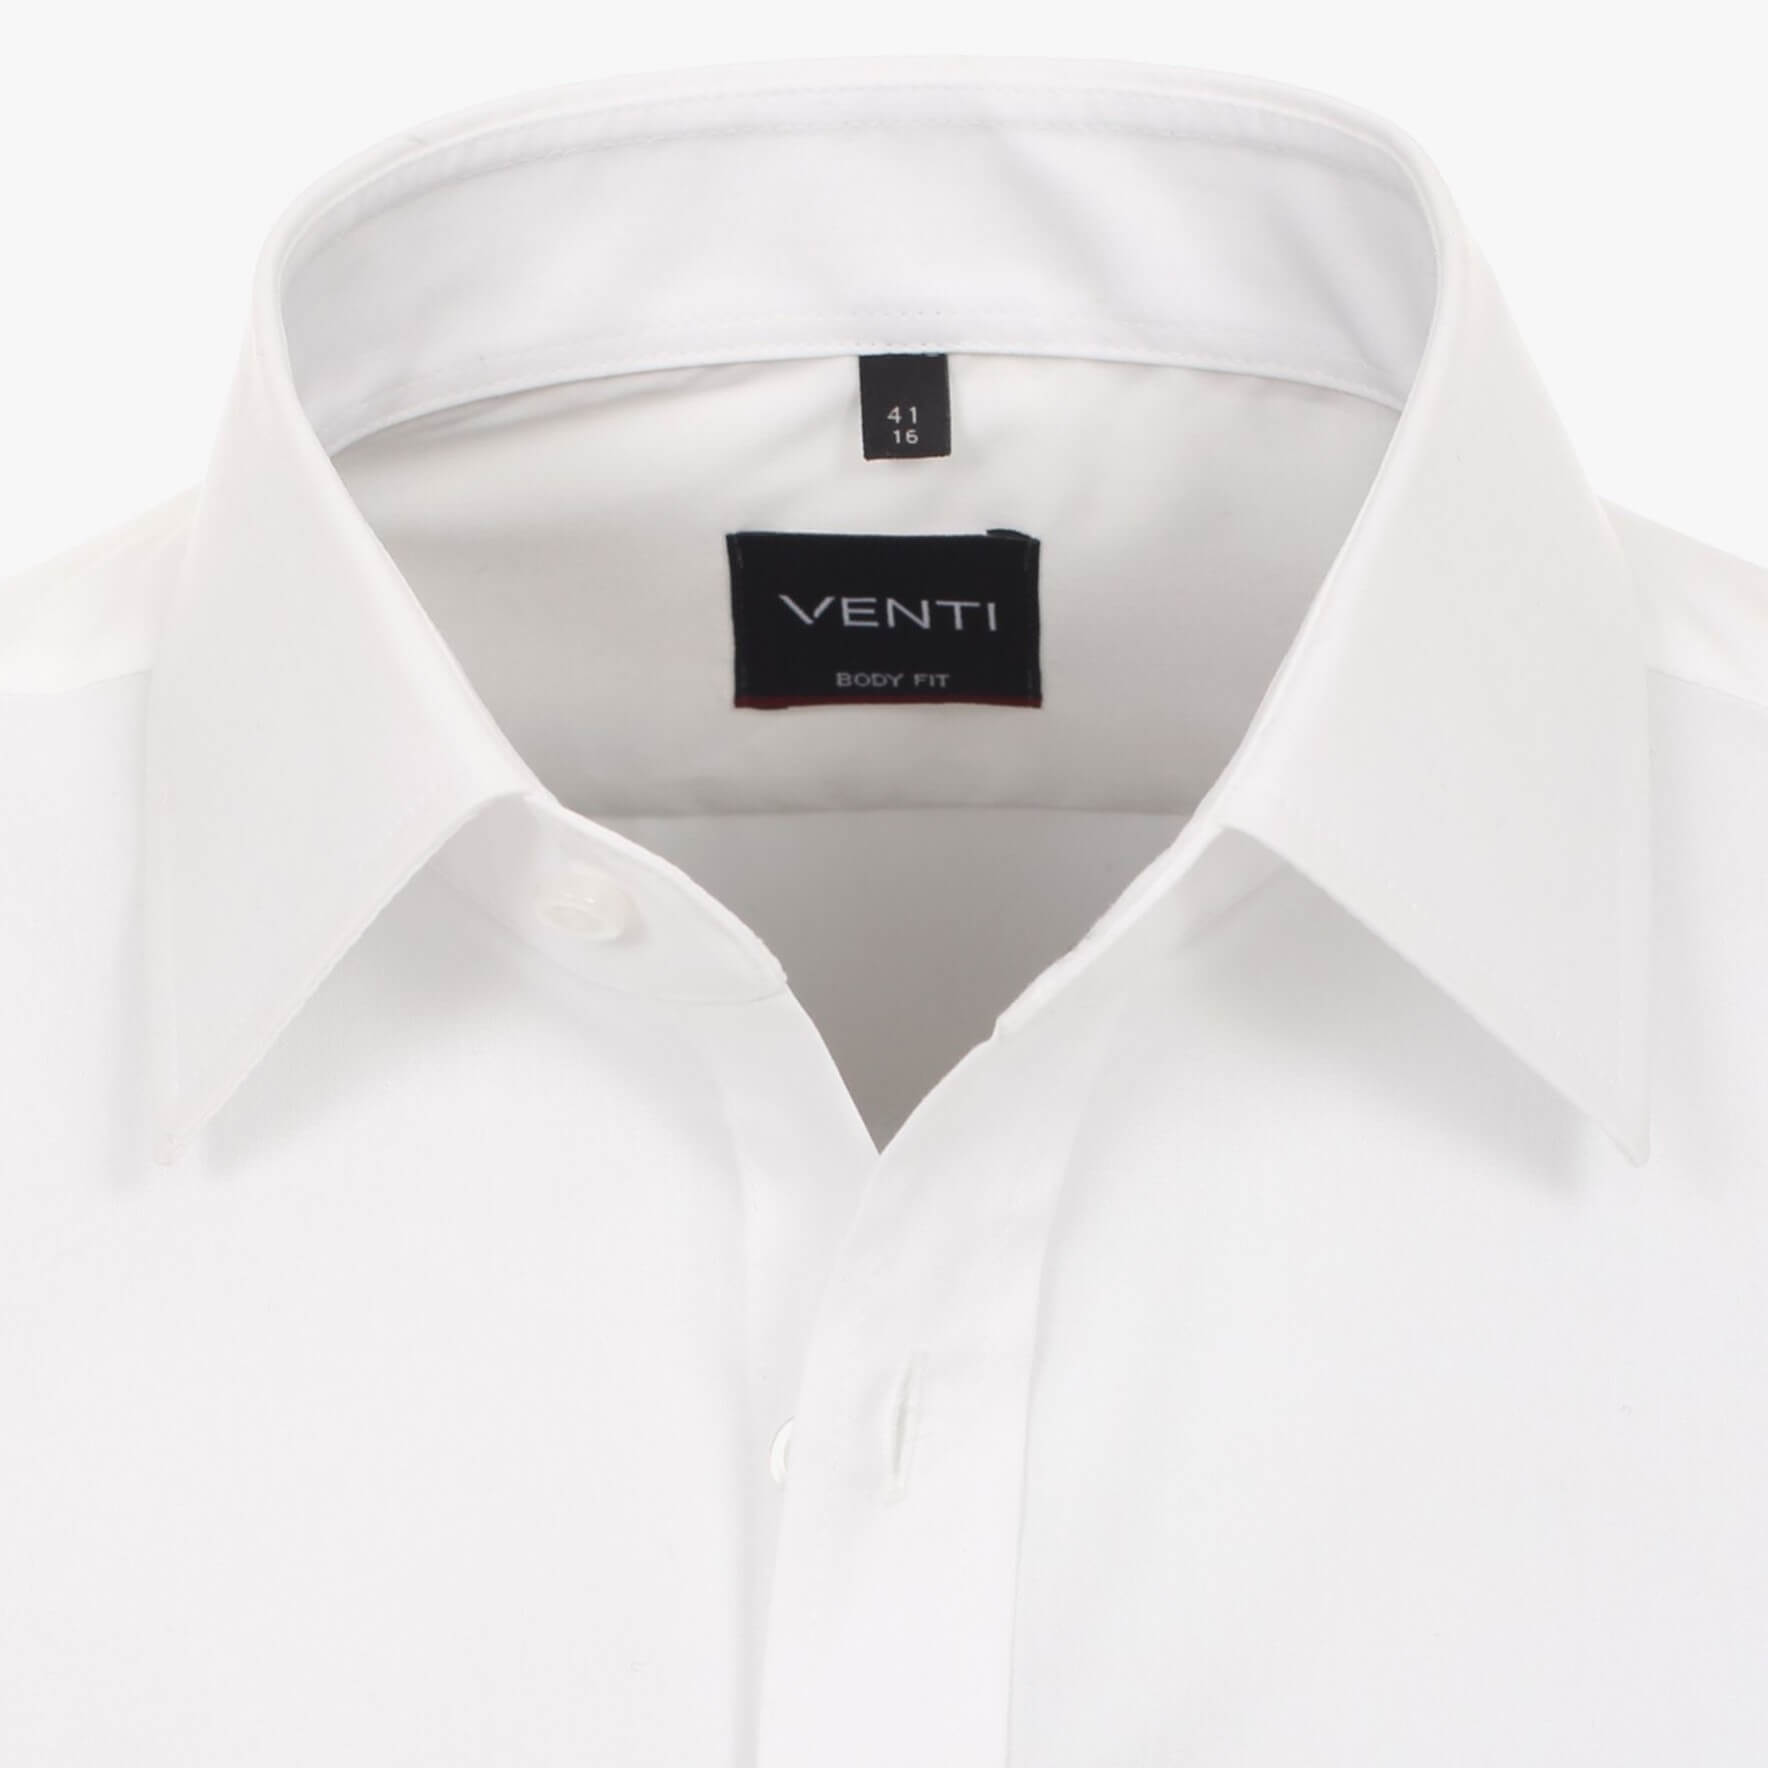 Сорочка мужская Venti Body Fit 001410-000 белая